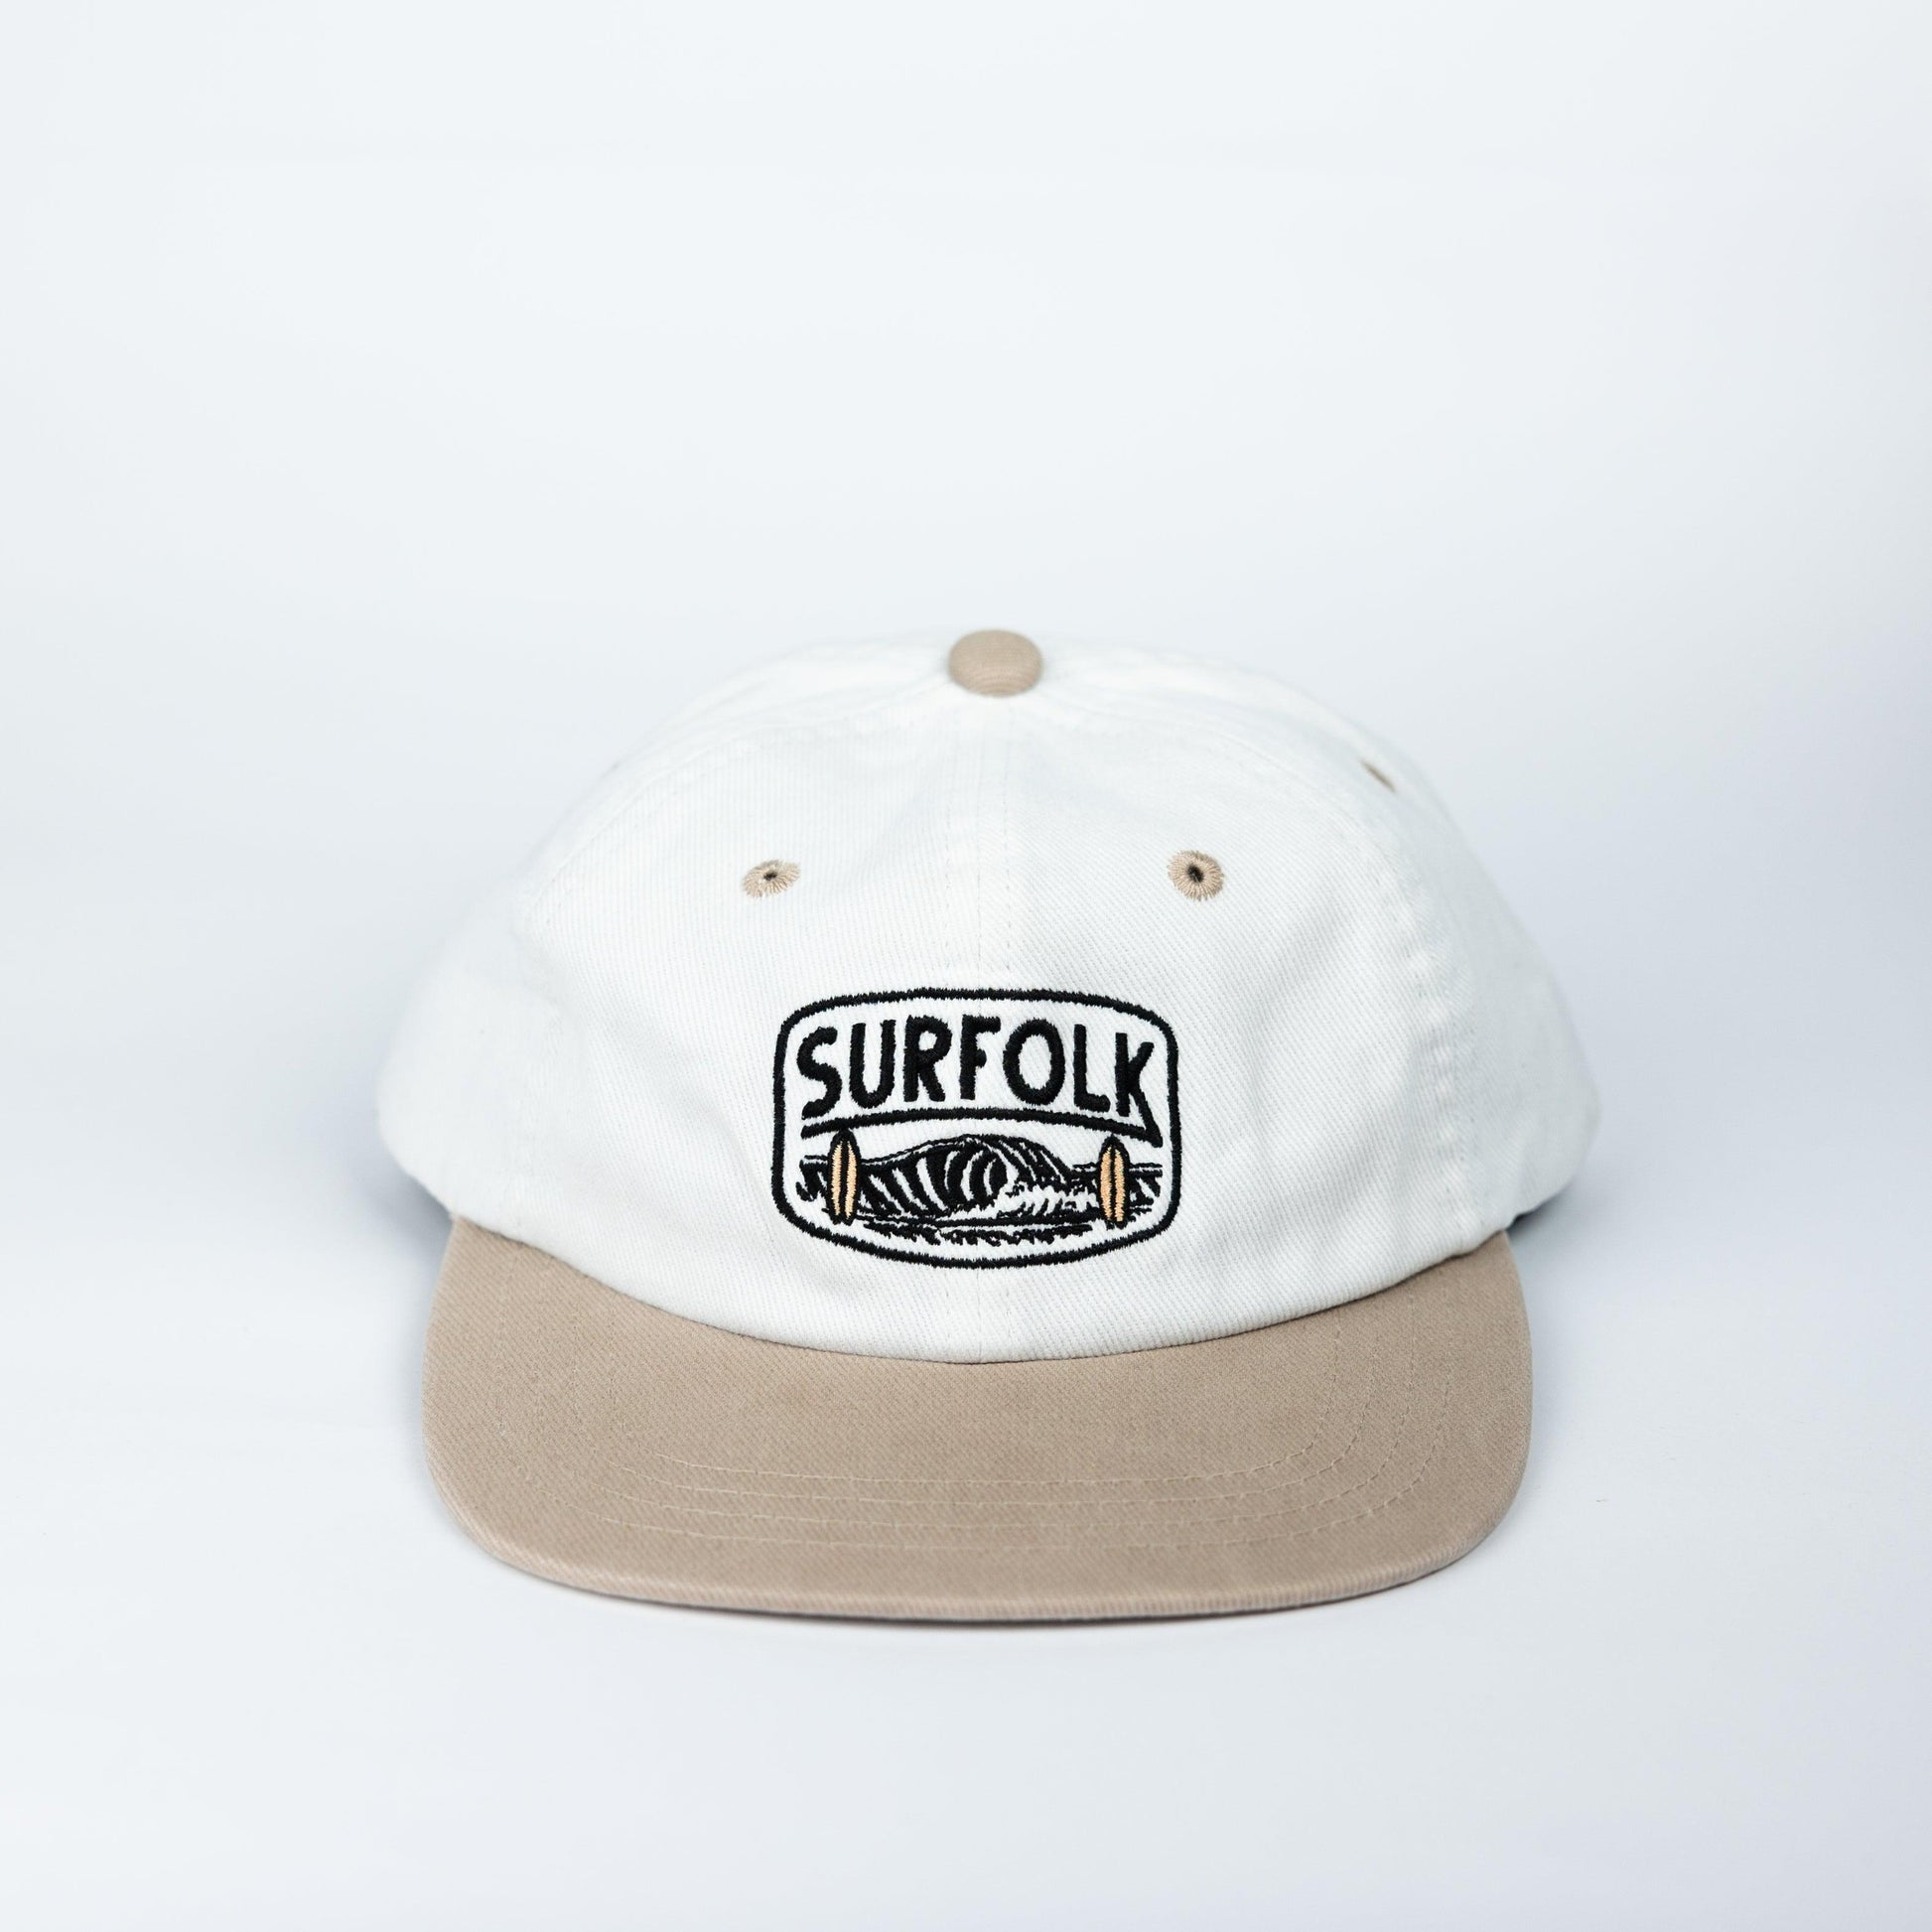 Vintage Swell Cap - Surfolk